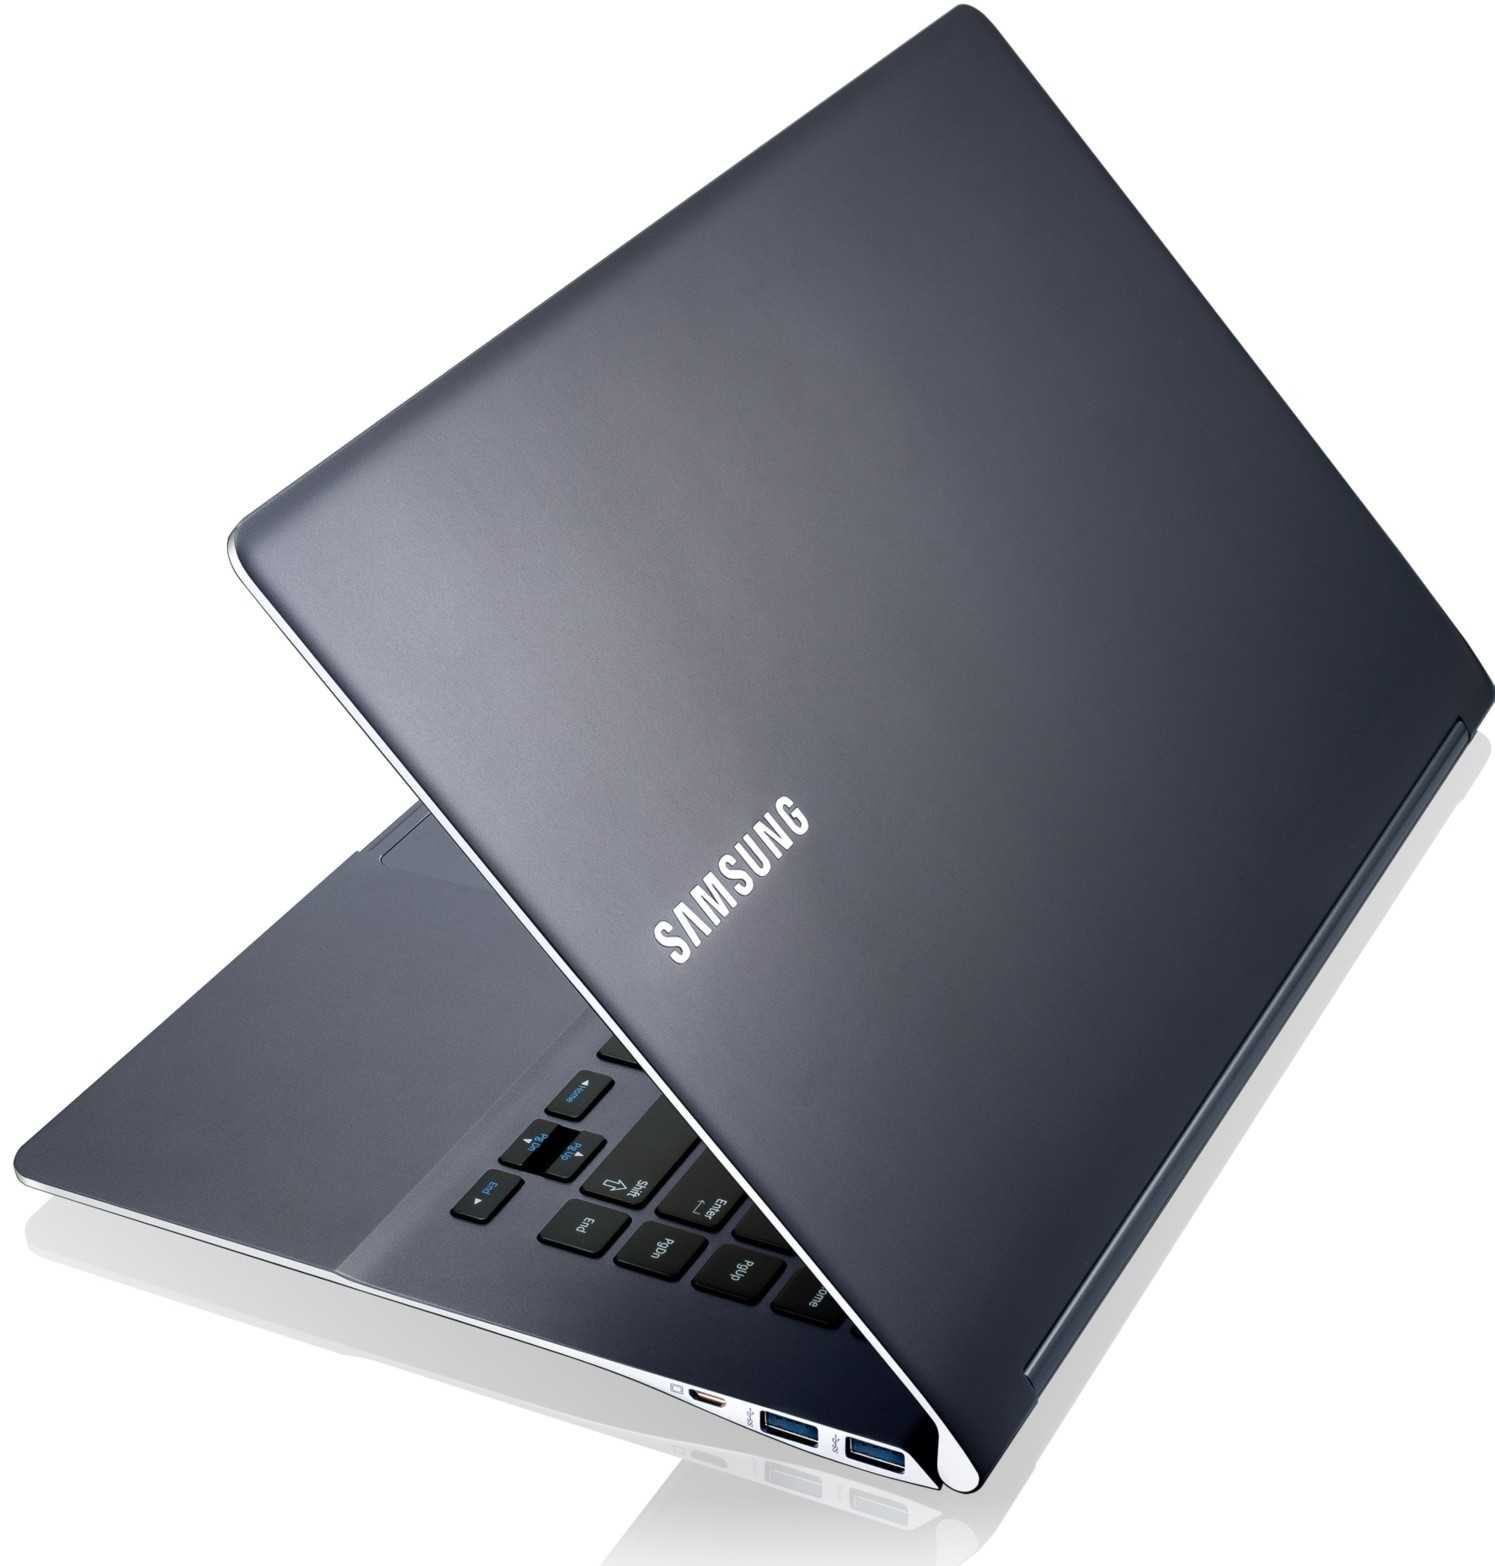 Samsung 9 series. Ультрабук Samsung 900x3c. Samsung Notebook 900x. Samsung np900x4c. Ультратонкий ноутбук Samsung 900x.